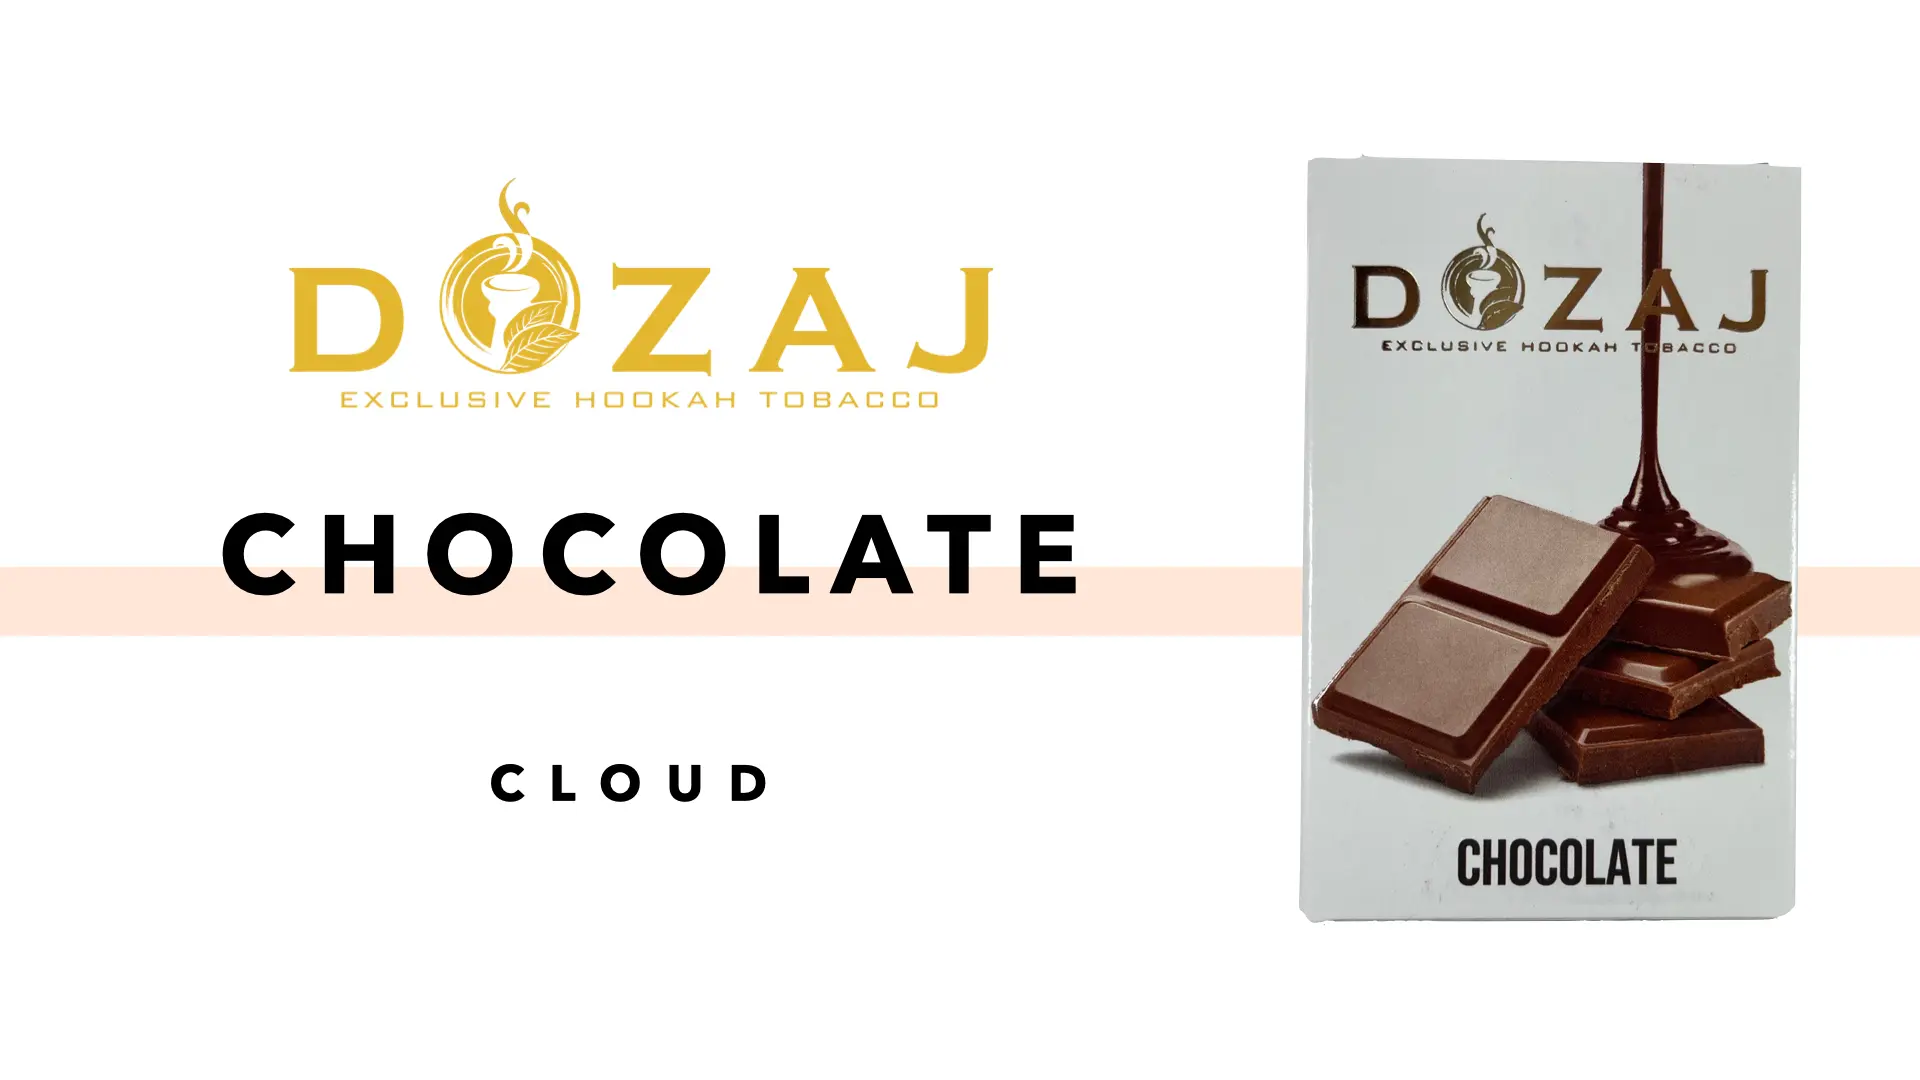 DOZAJ(ドザジ) chocolate(チョコレート) フレーバーレビュー